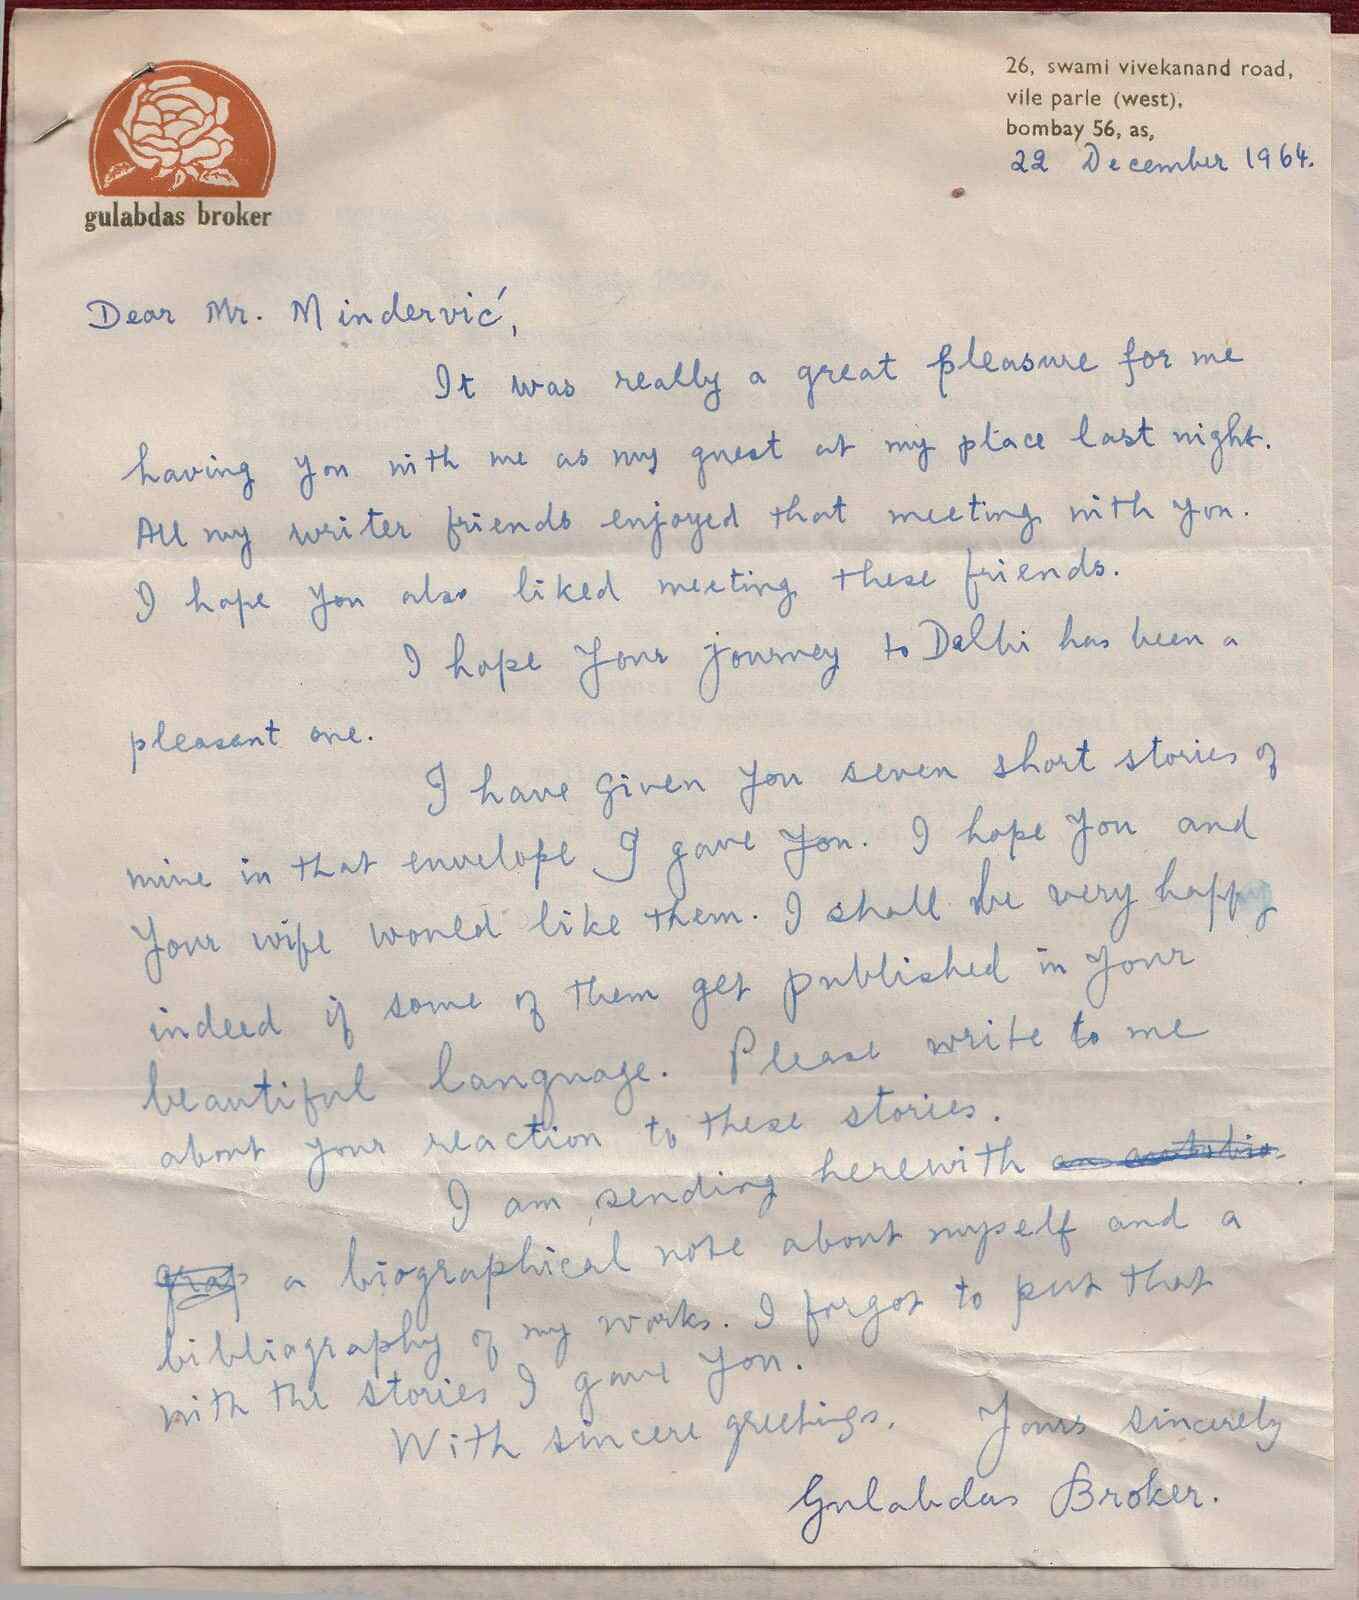 1964 Hand written letter Gulabdas Broker Gujarati Writer Journalist  India